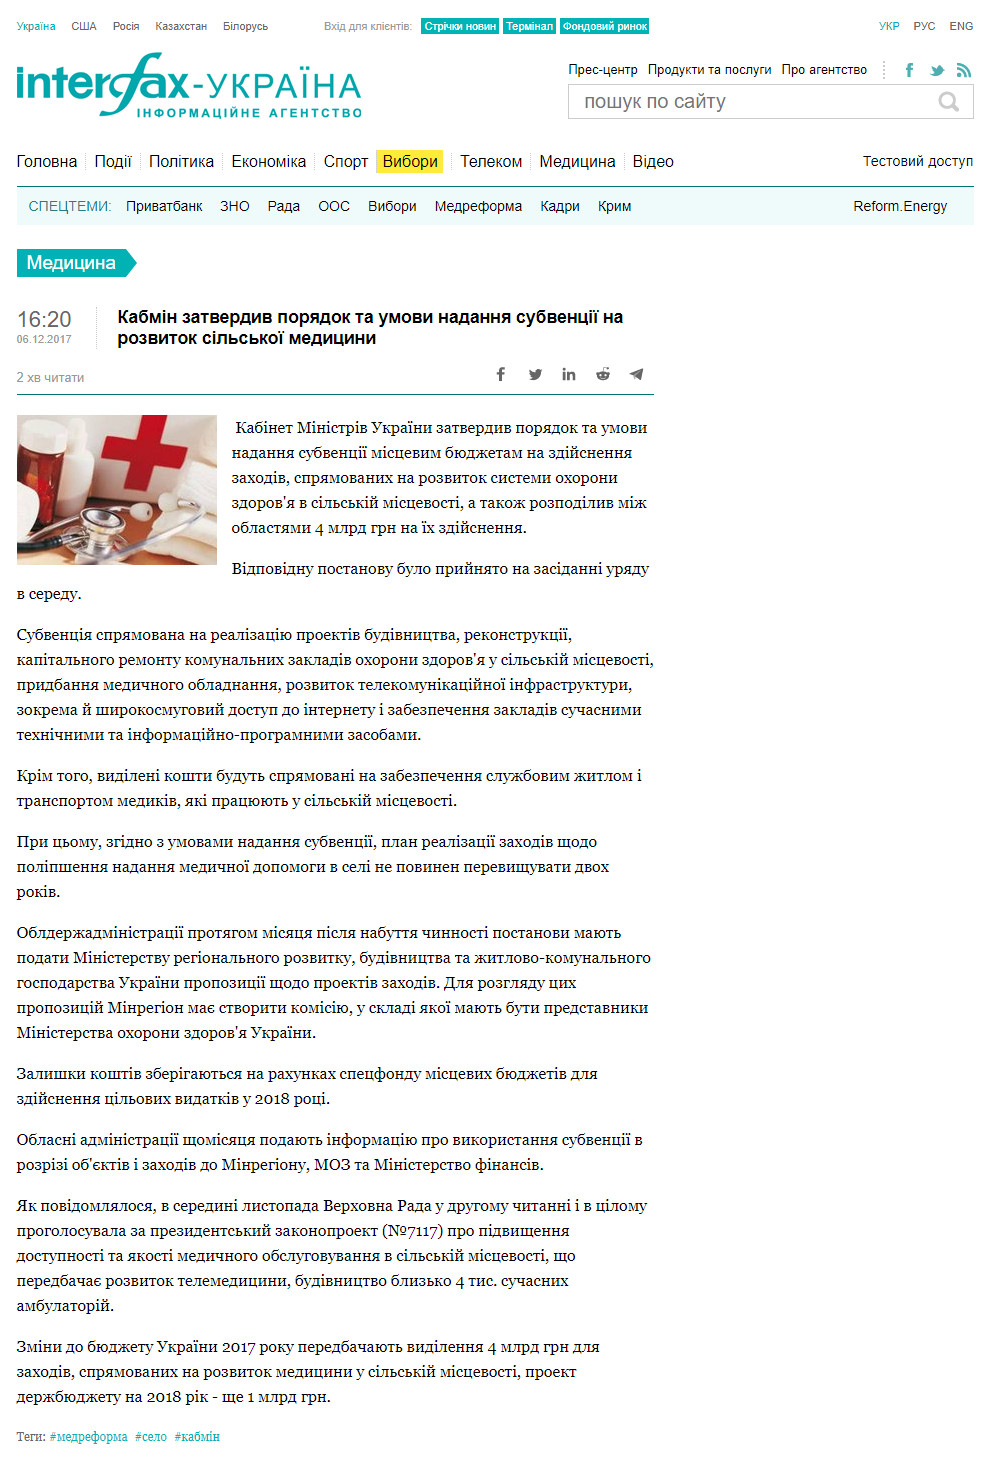 https://ua.interfax.com.ua/news/pharmacy/467638.html